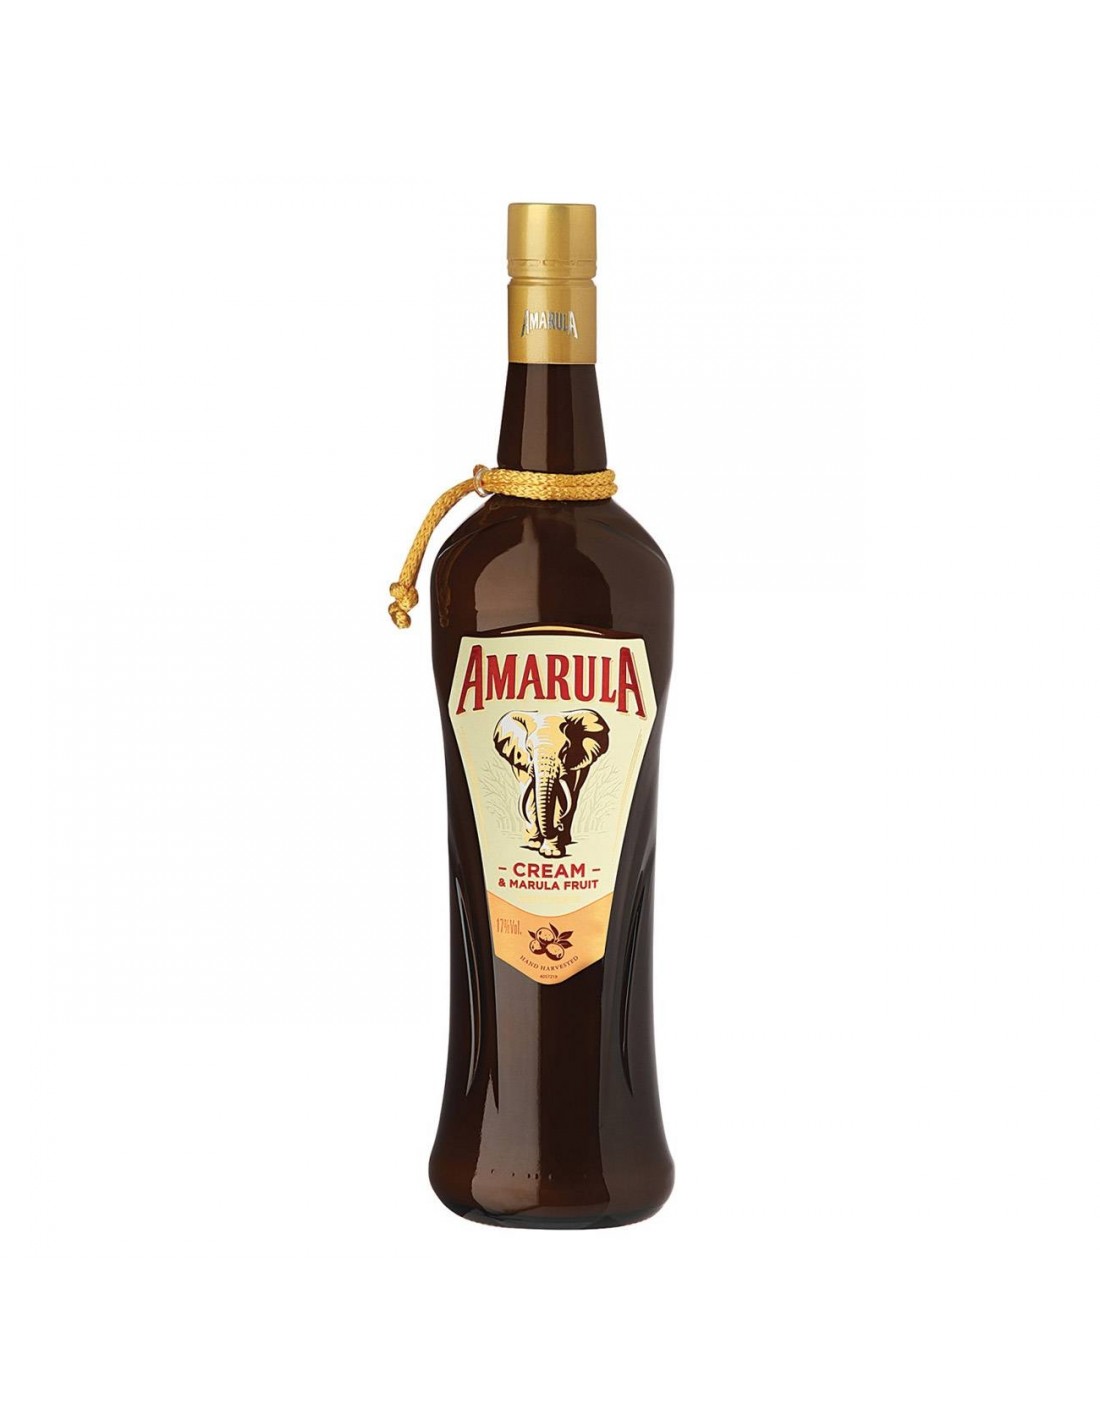 Lichior Amarula - Cream & Marula Fruit 0.7l Alc. 17%